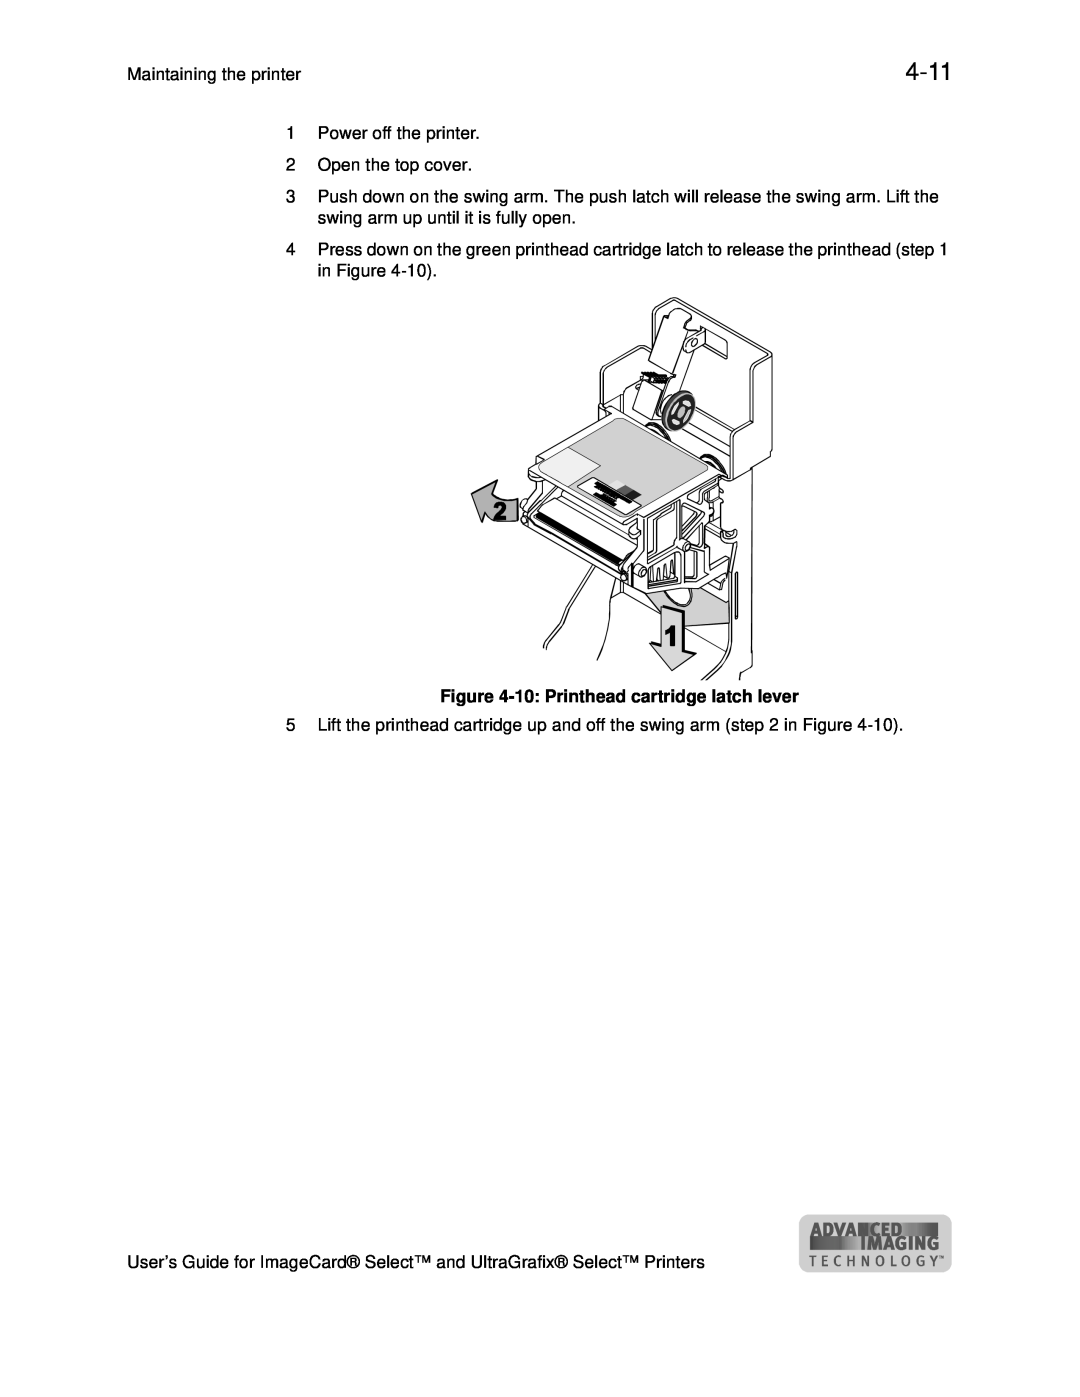 Datacard Group ImageCard SelectTM and UltraGrafix SelectTM Printers manual 4-11, 10 Printhead cartridge latch lever 